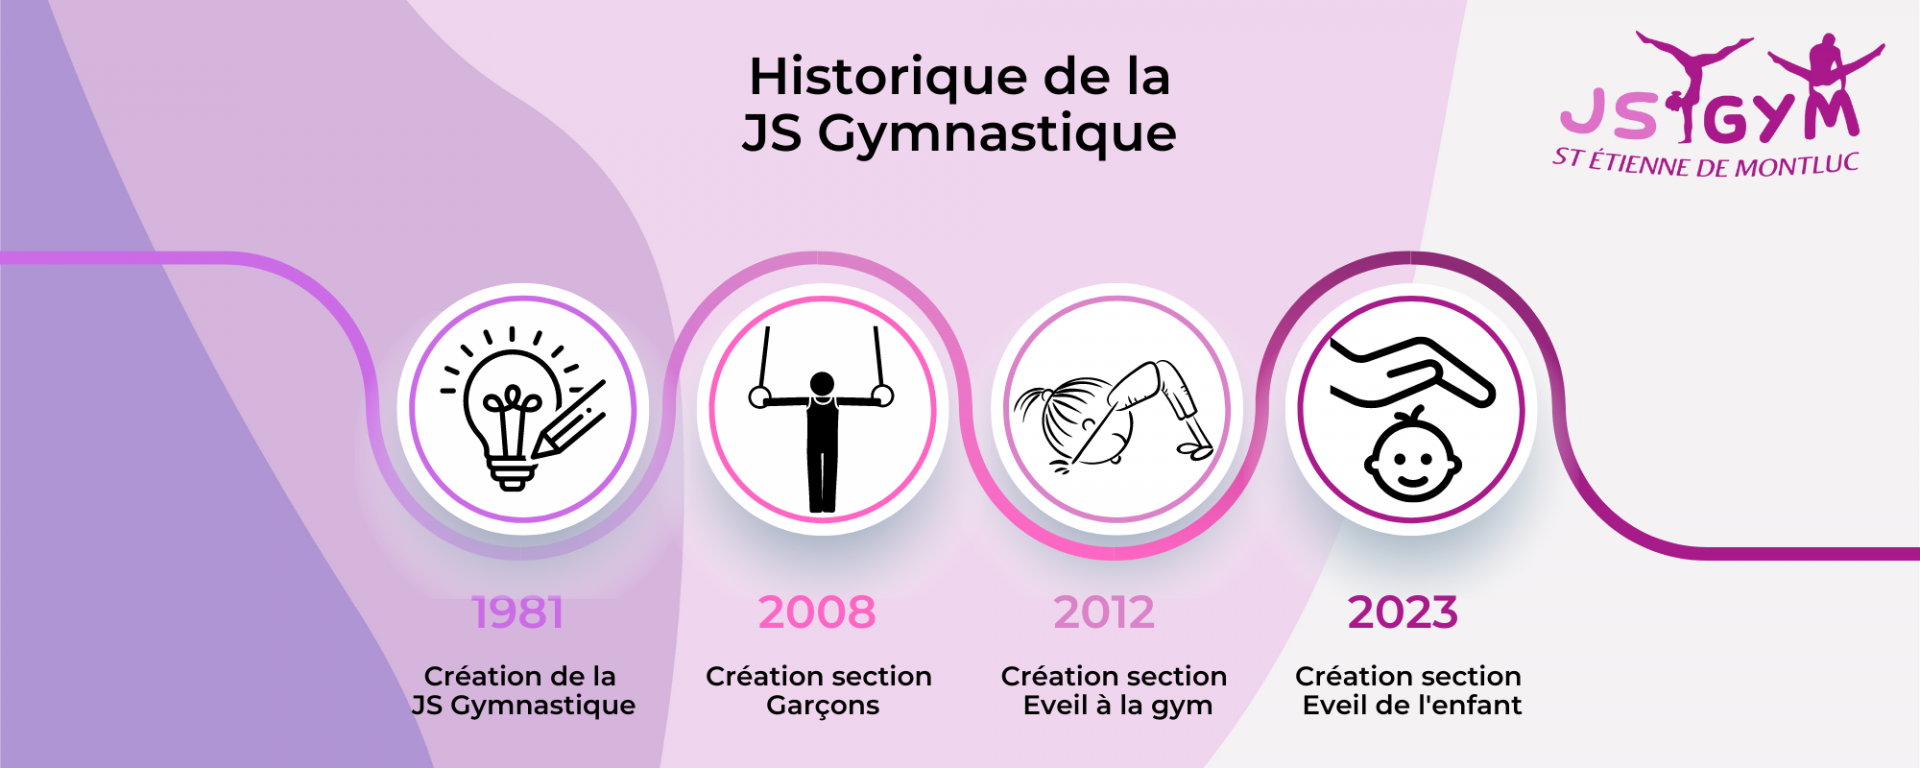 Historique de la js gymnastique